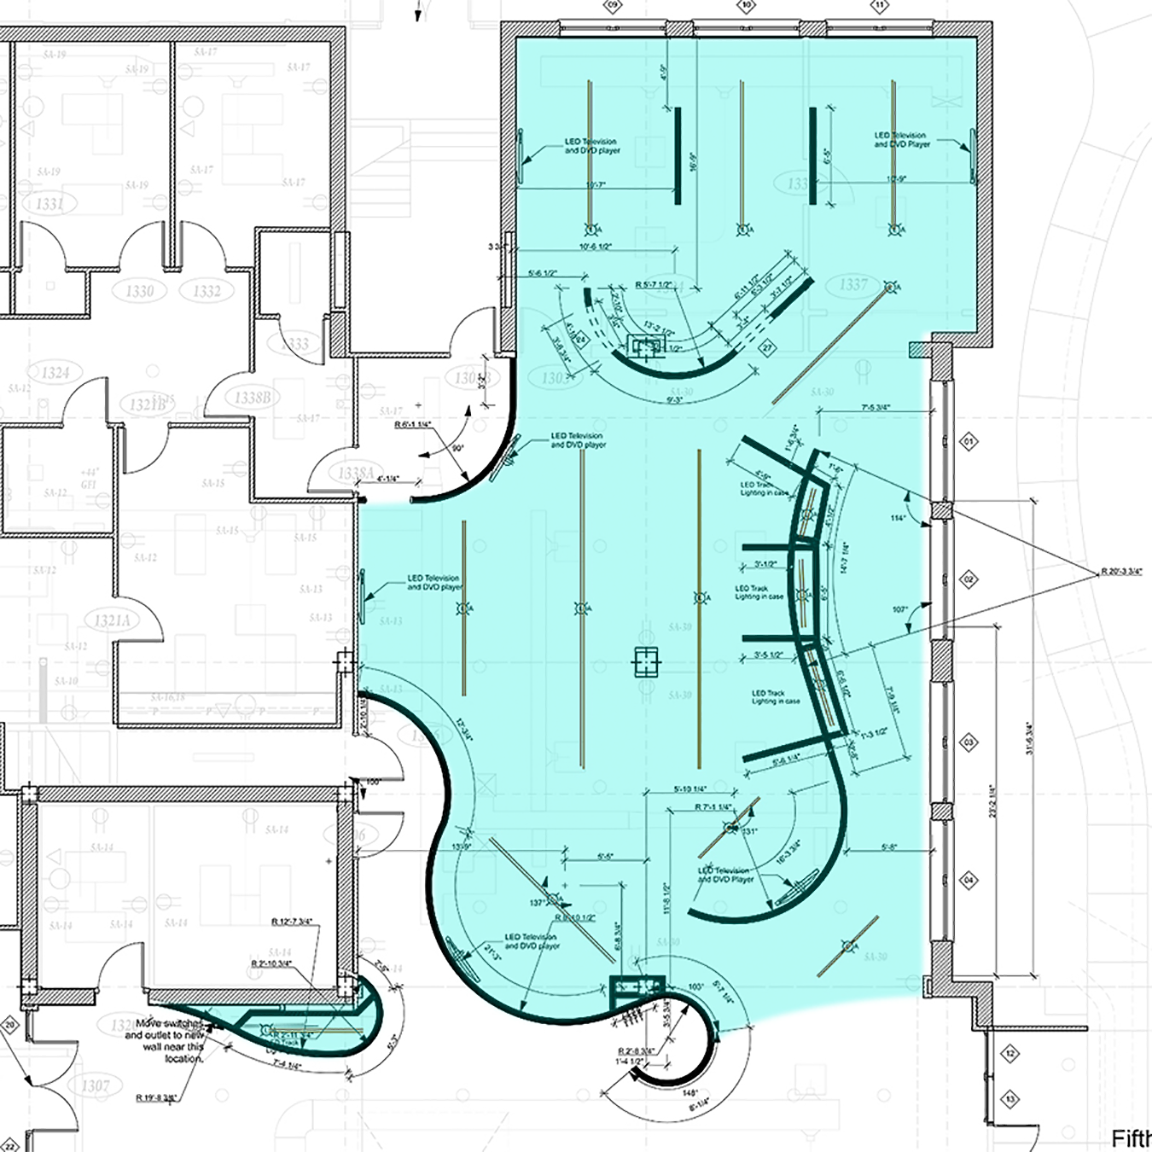 Church of God Interpretive Center - Floor Plan